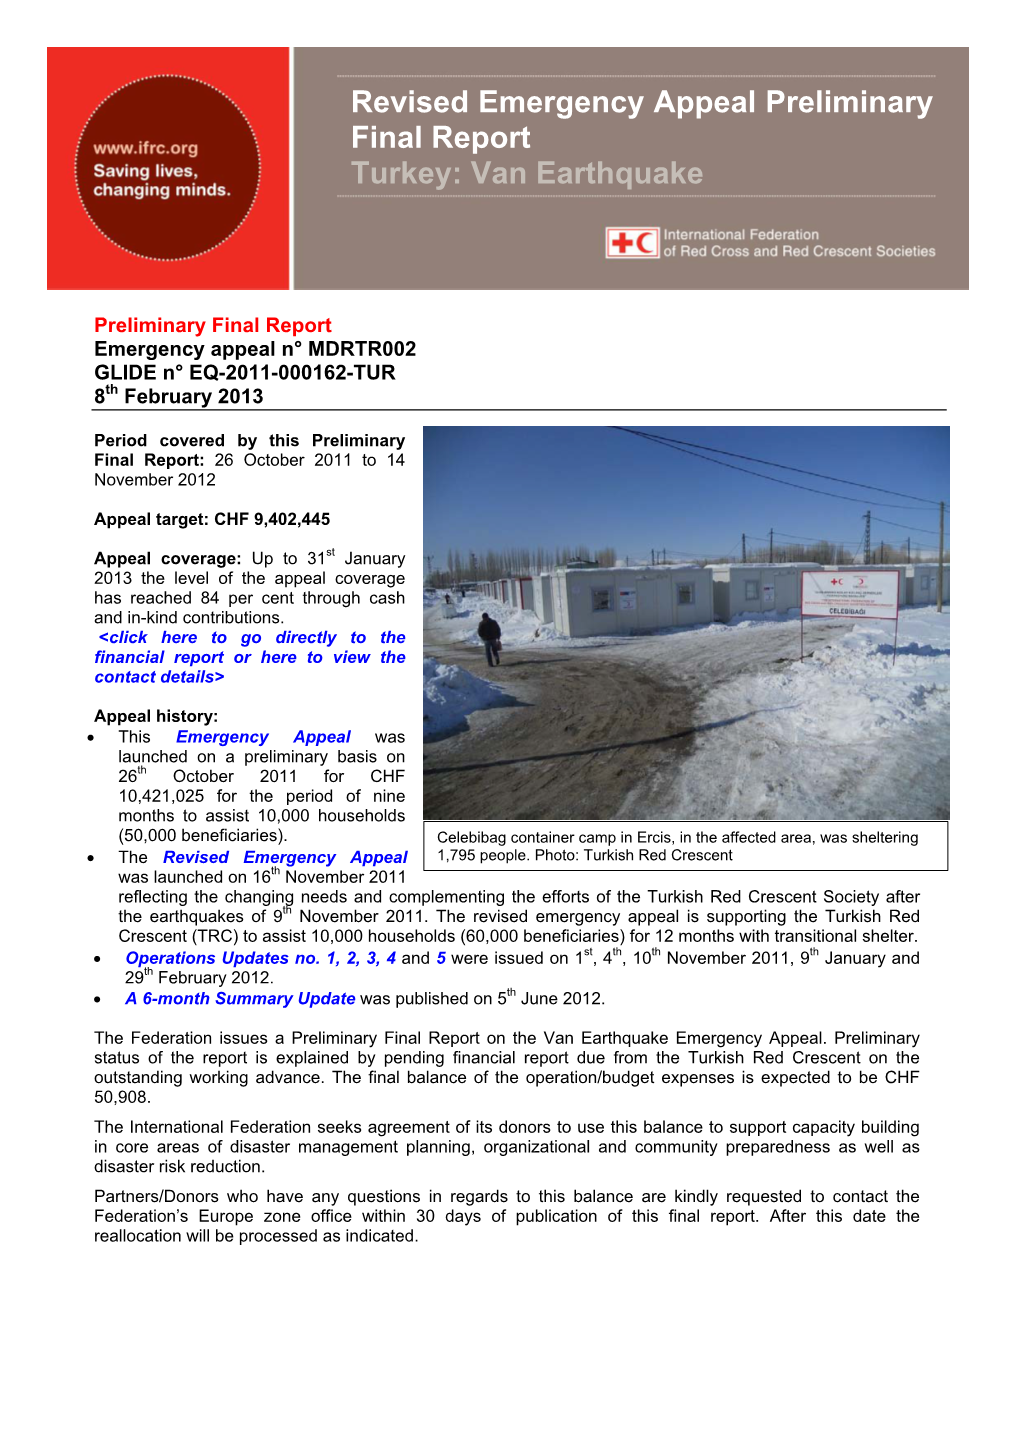 Revised Emergency Appeal Preliminary Final Report Turkey: Van Earthquake